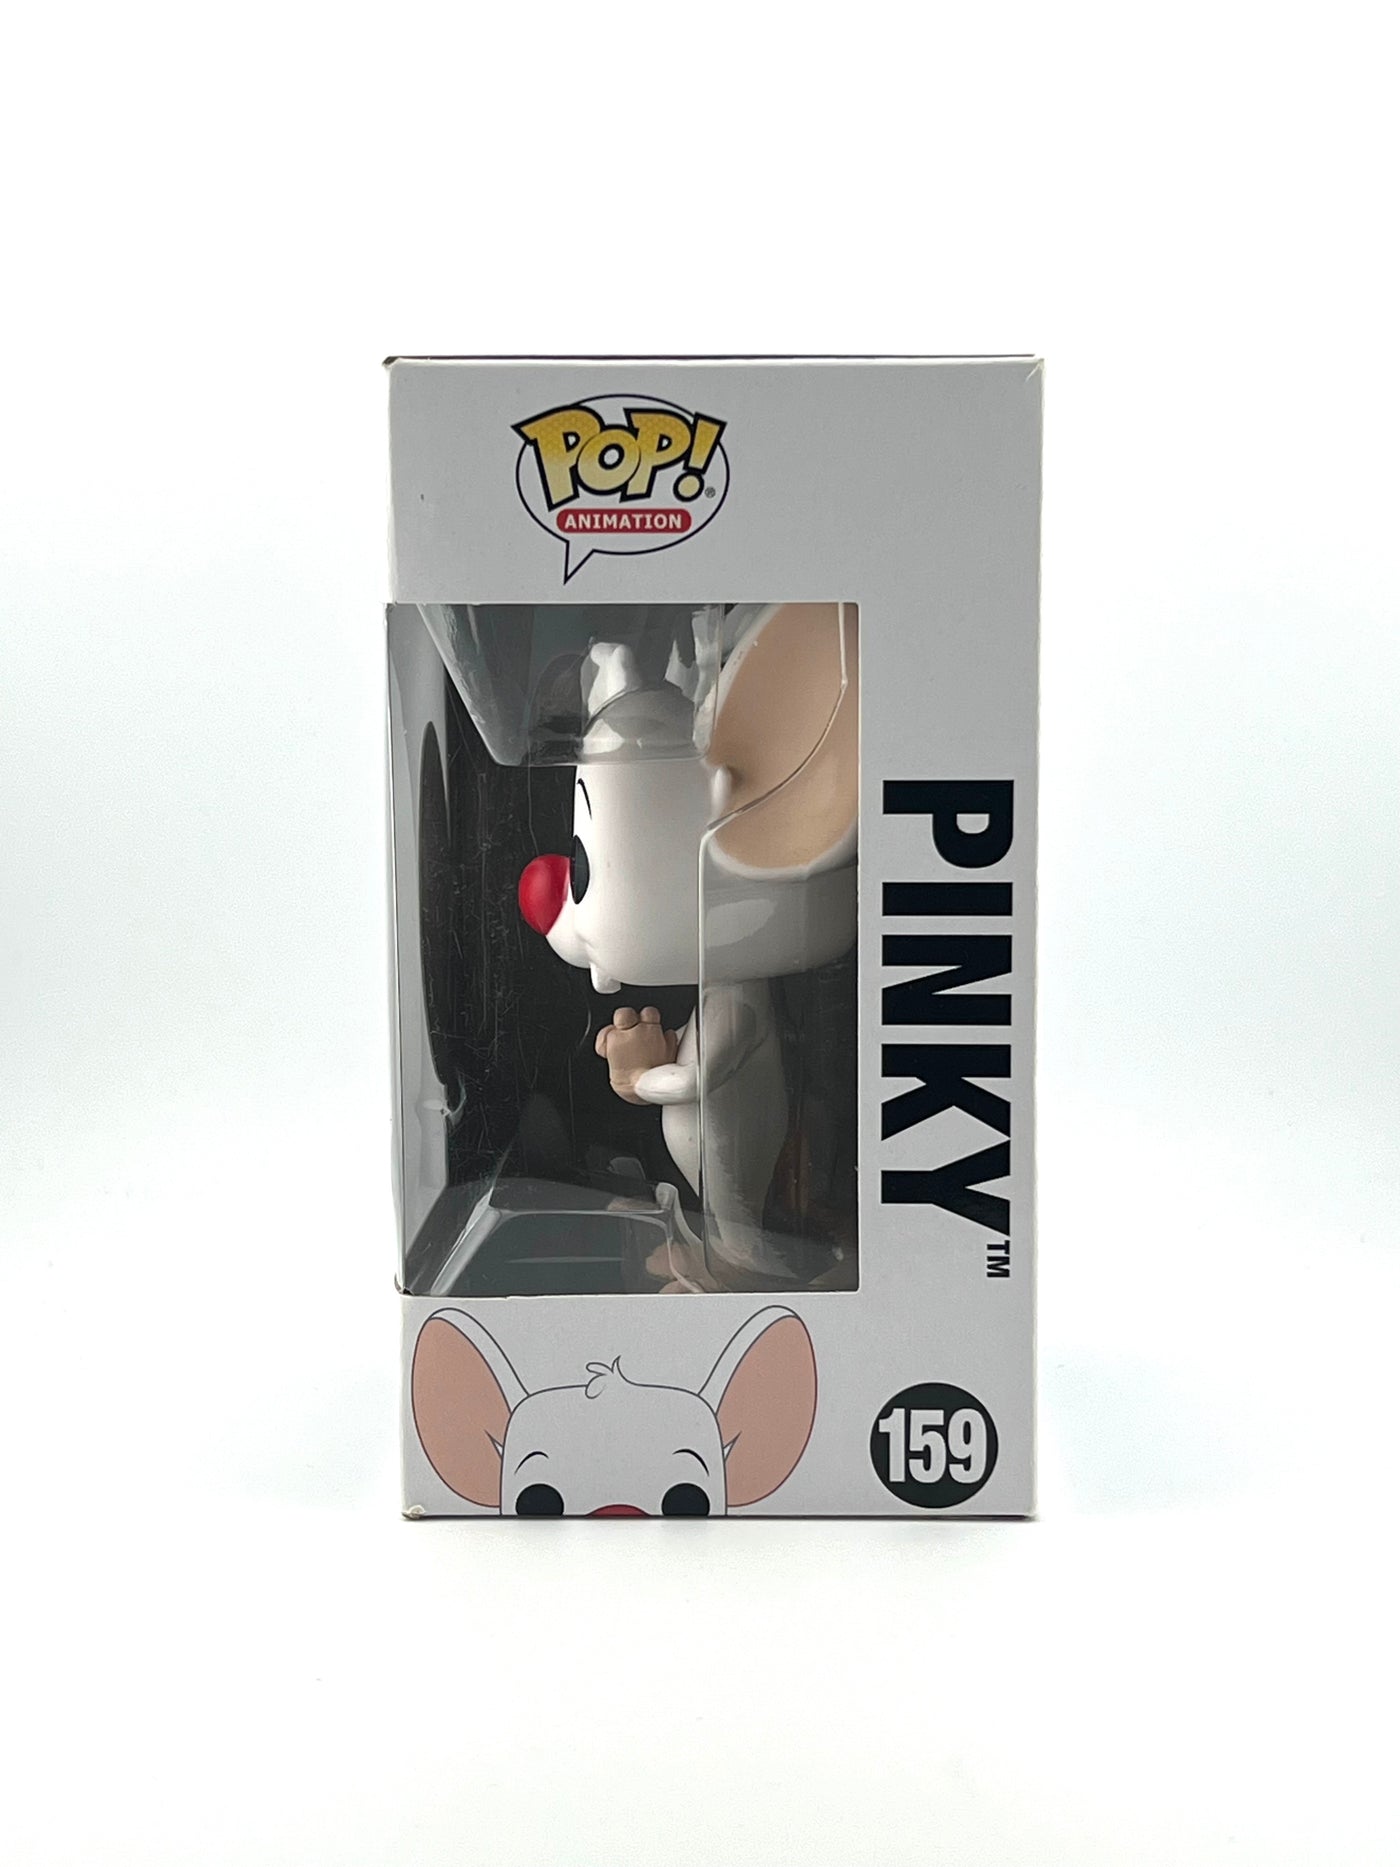 Funko pop! Pinky and the brain: pinky 159